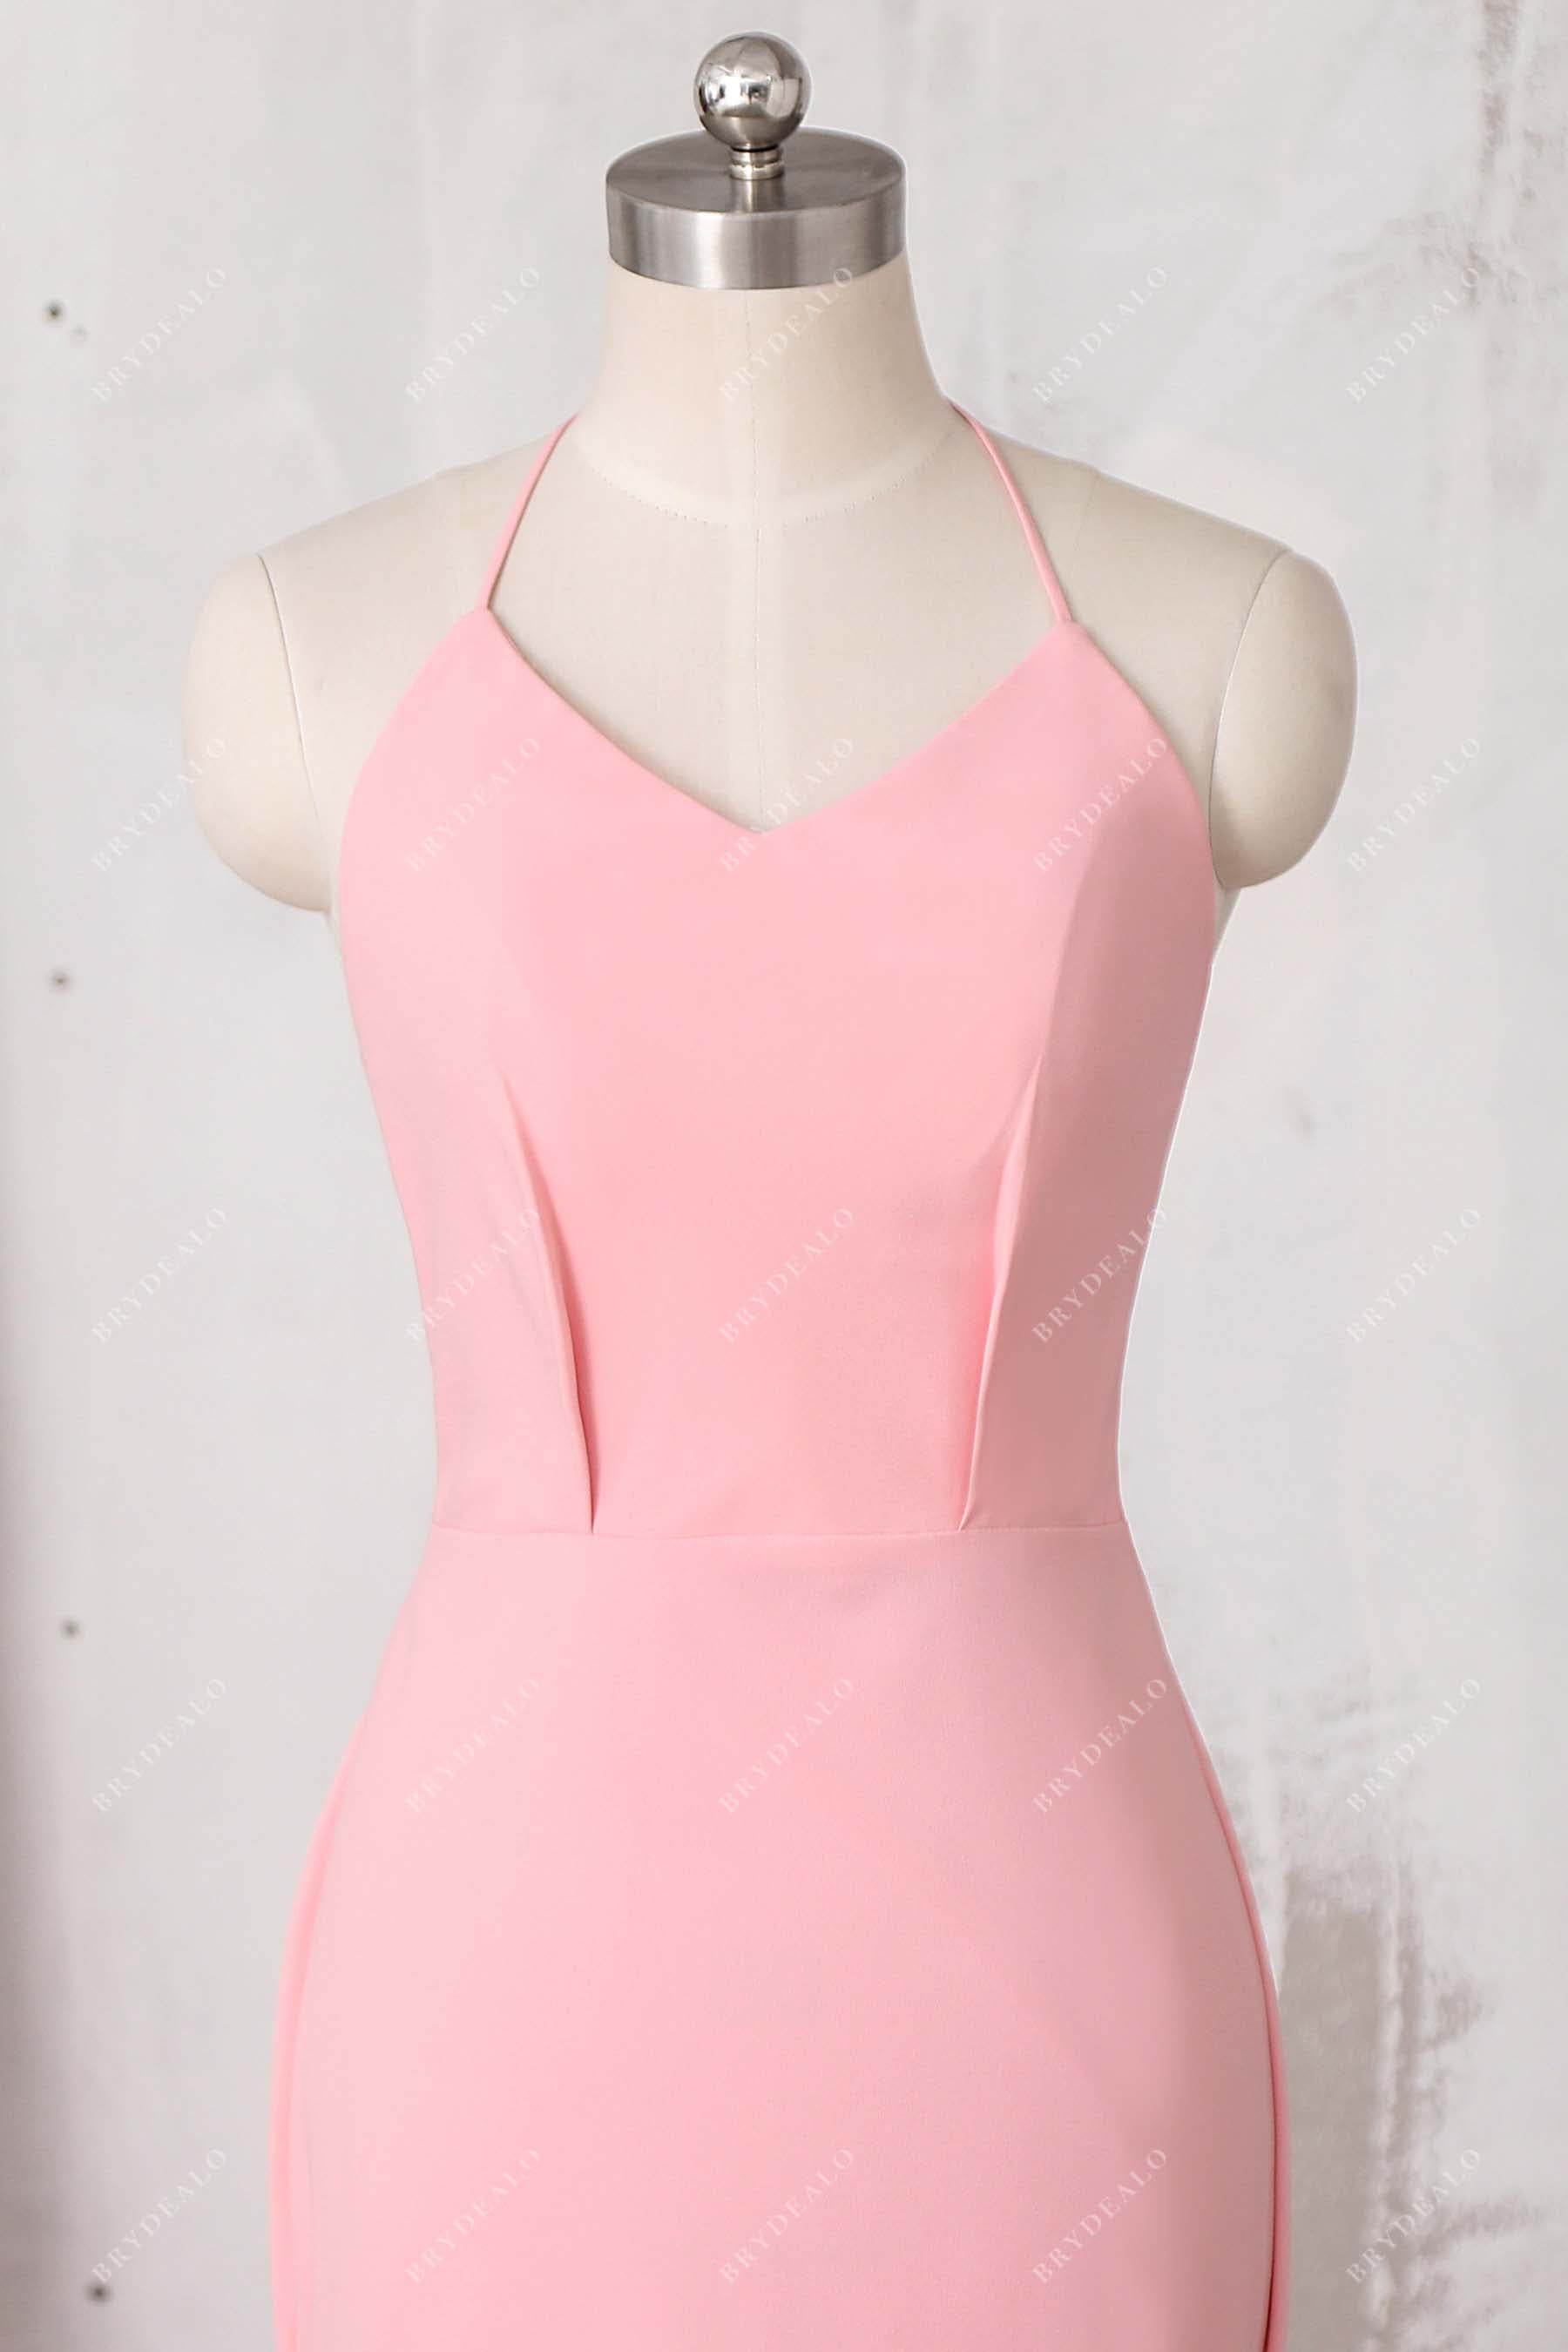 spaghetti straps halter pink dress